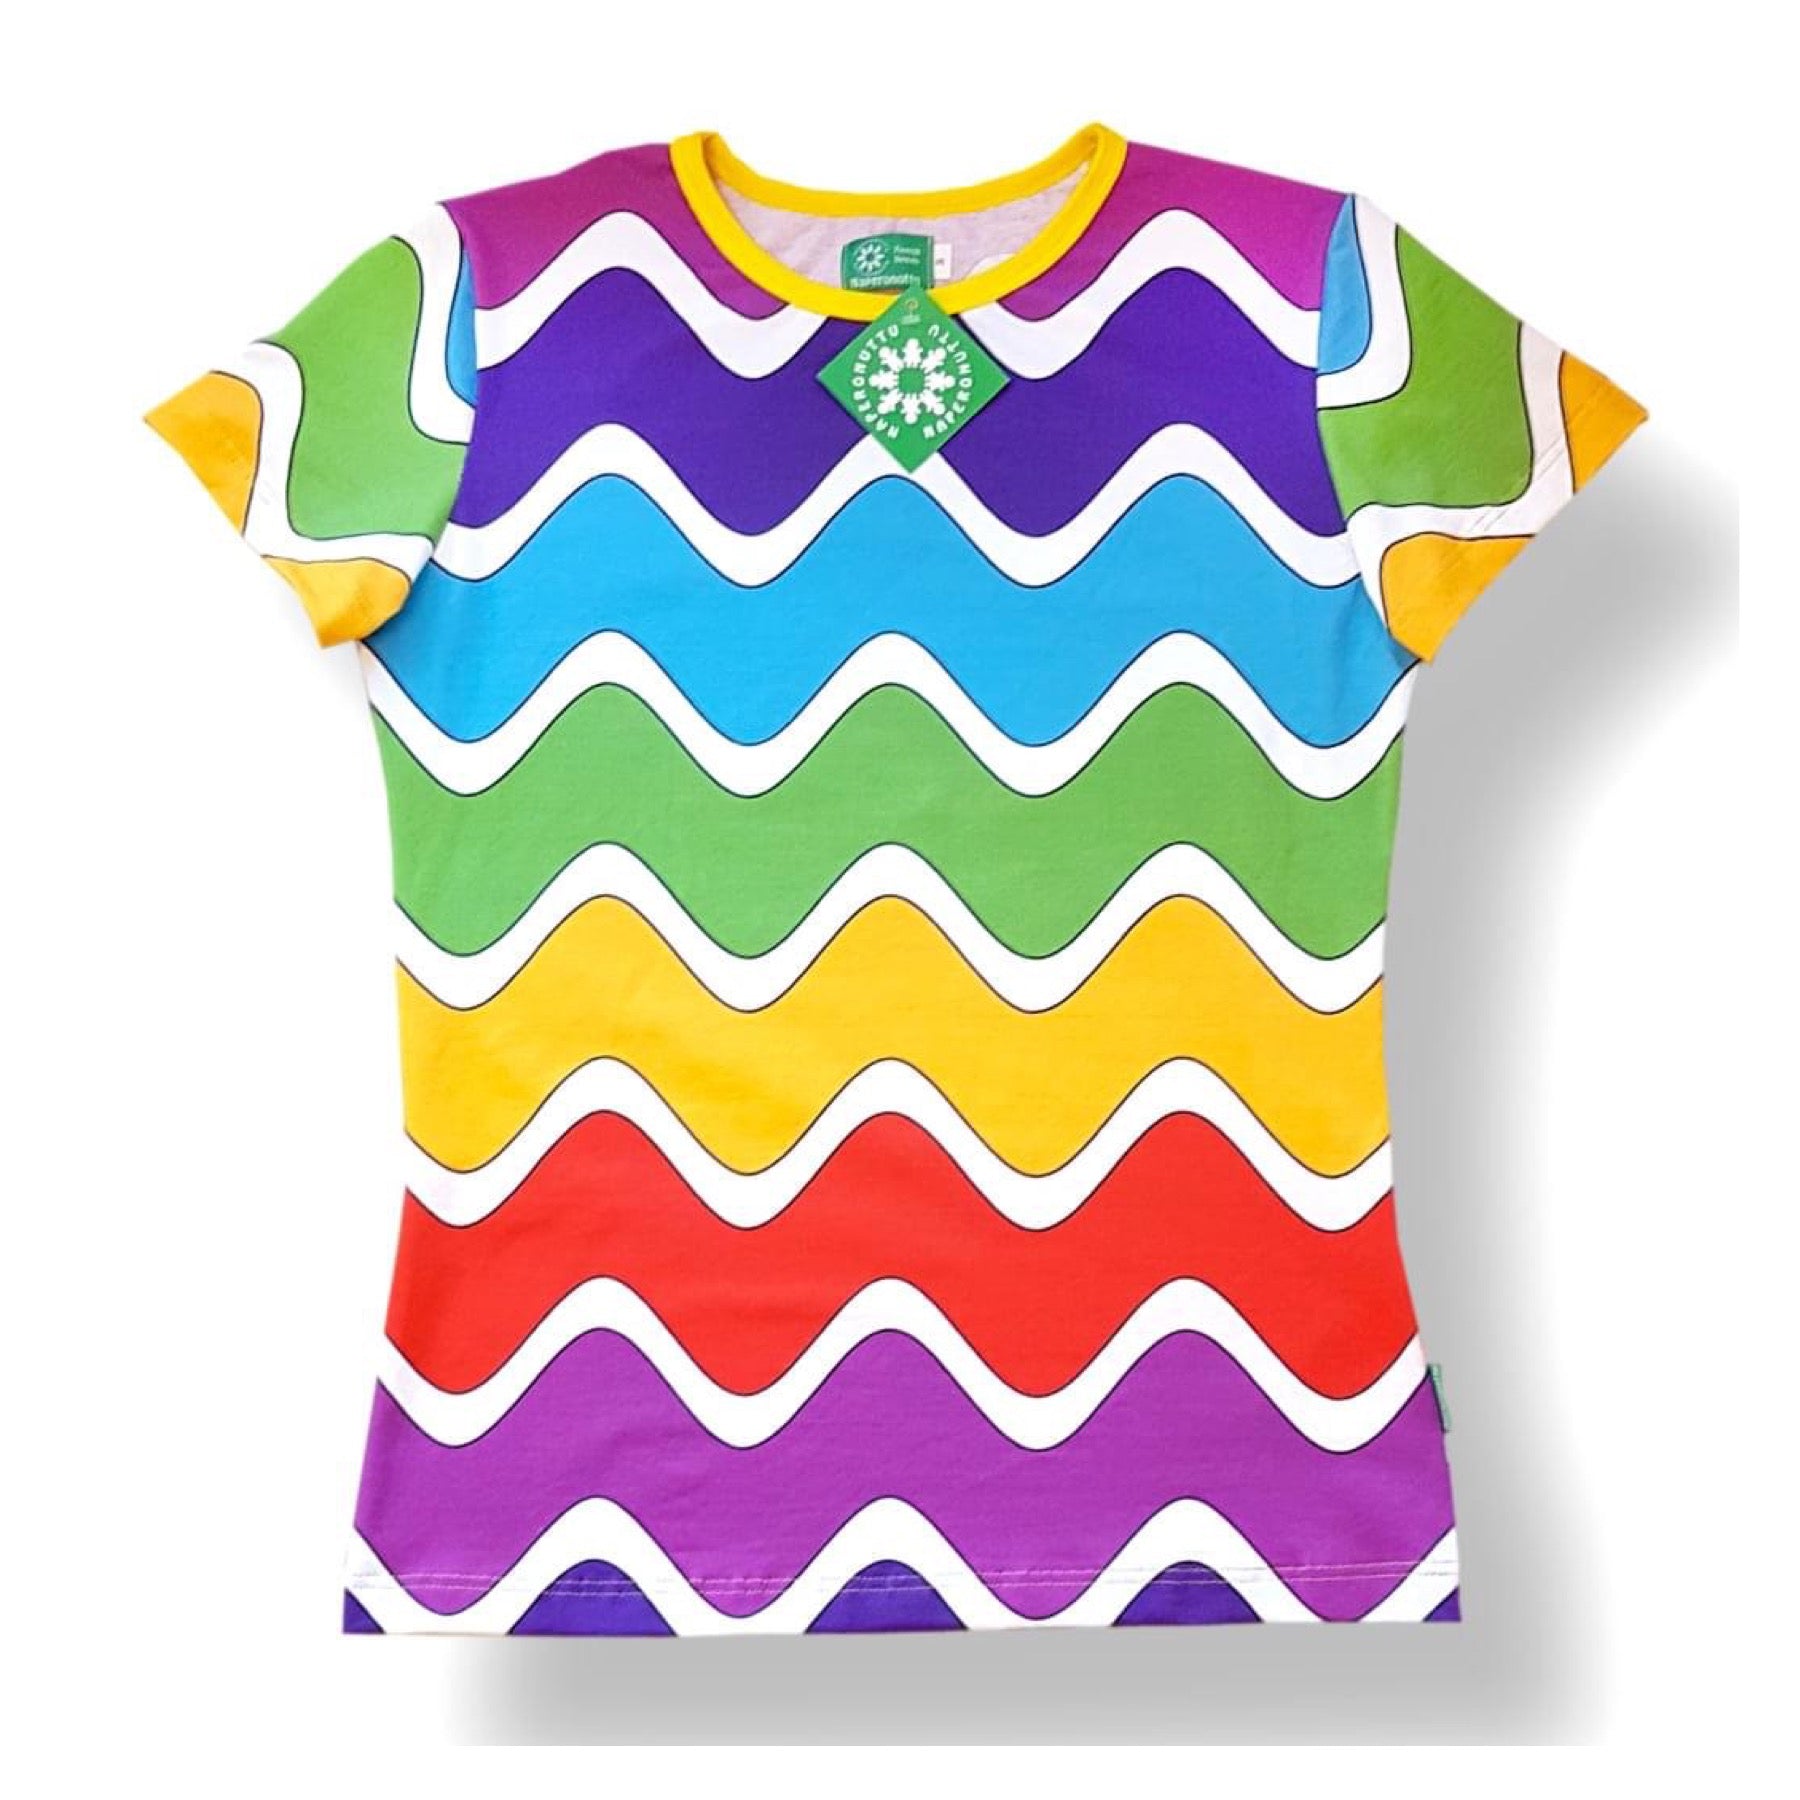 Naperonuttu Shirt SS Rainbow Waves (Adults - Ladies)